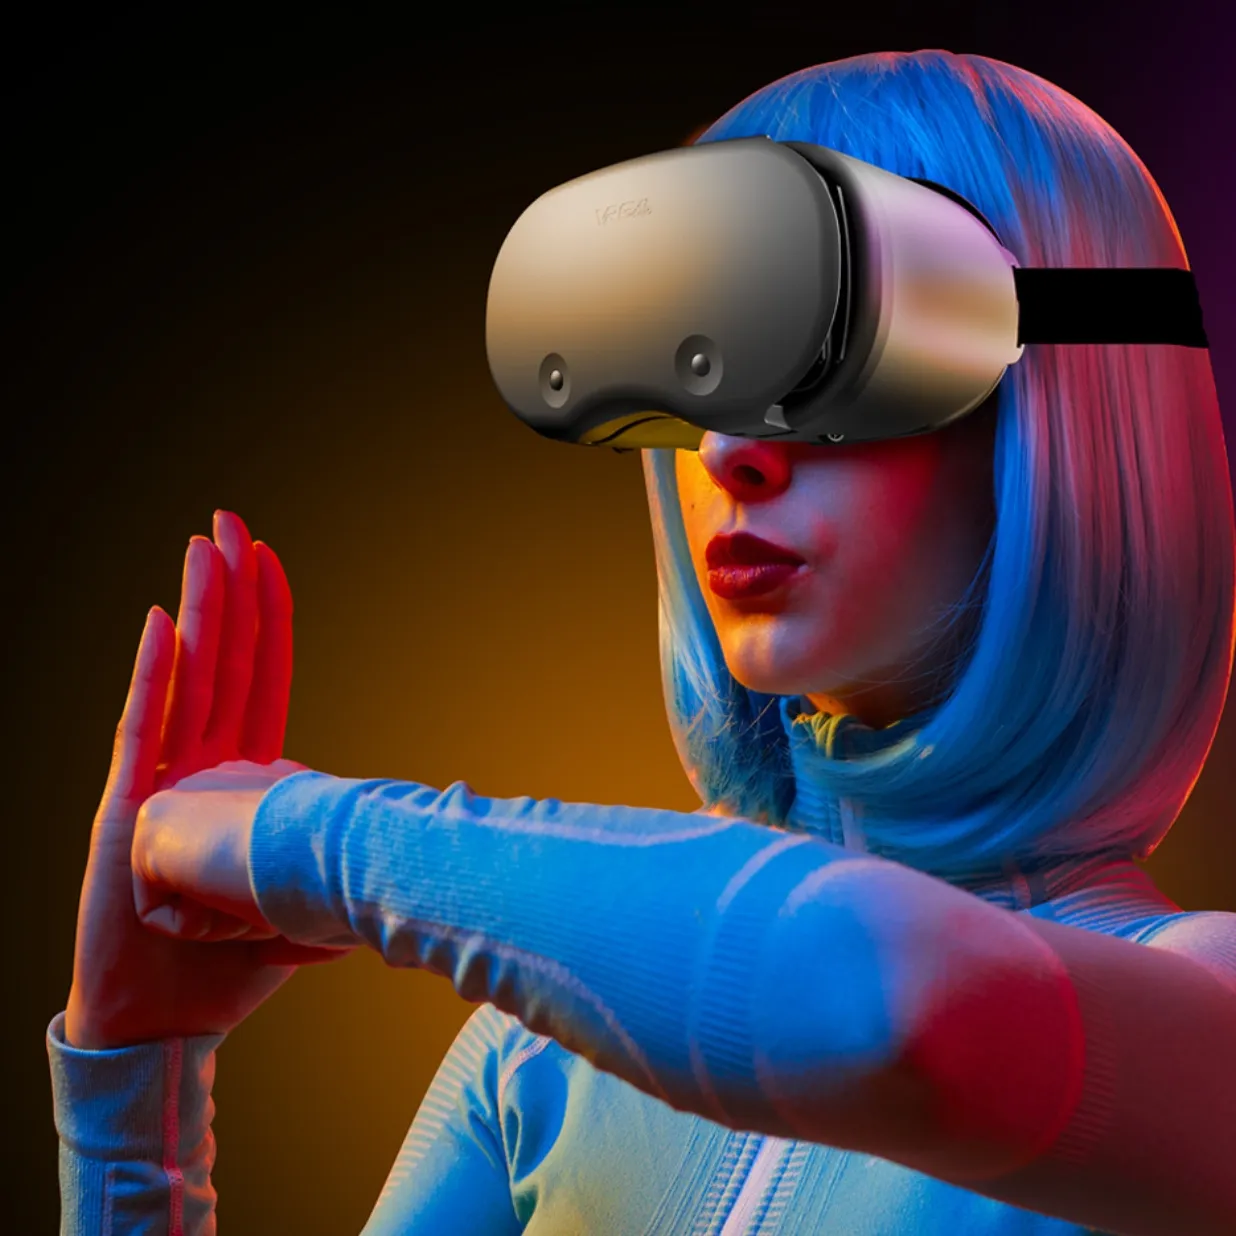 Kacamata virtual VR VRGpro X7, ponsel, pelindung mata cahaya biru, cermin ajaib 3D